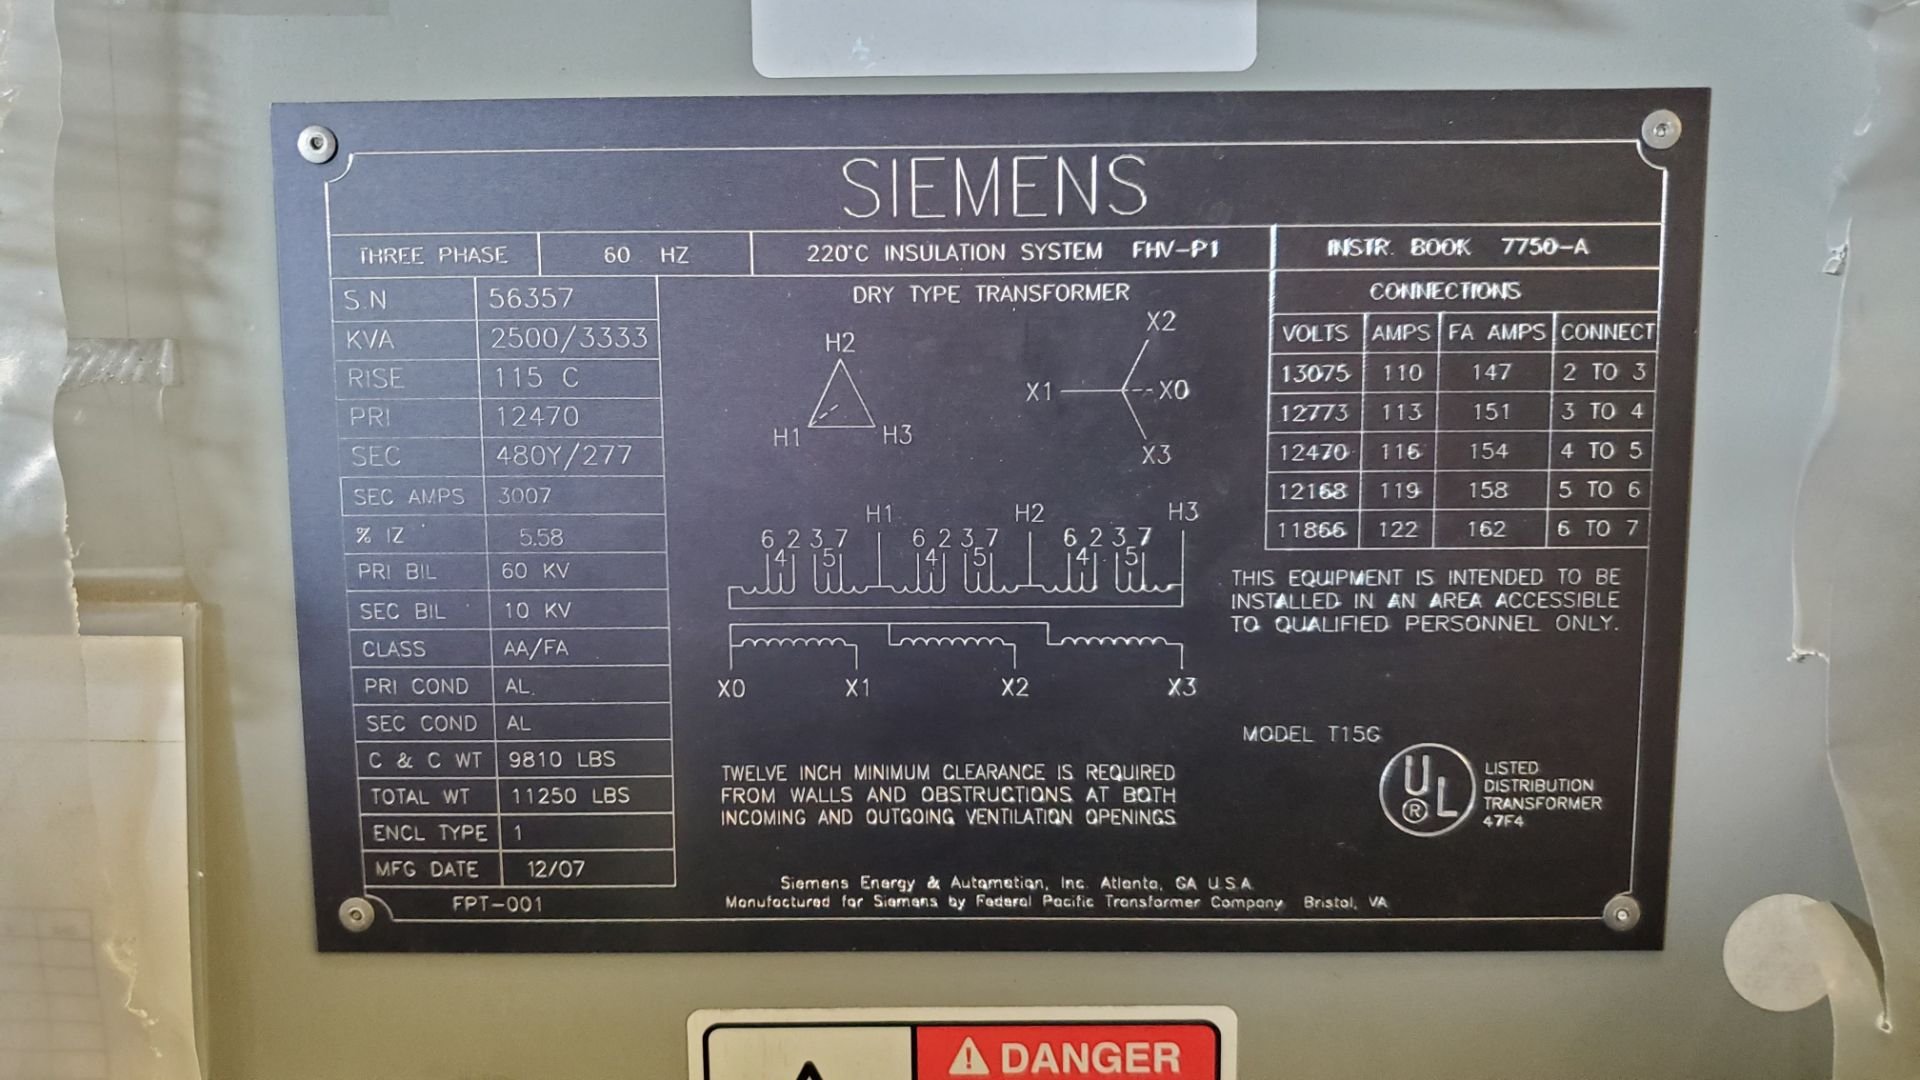 Siemens 2500/3333, 12470V-480Y/277 Dry Transformer (LOADING FEES: $400) - Image 2 of 2